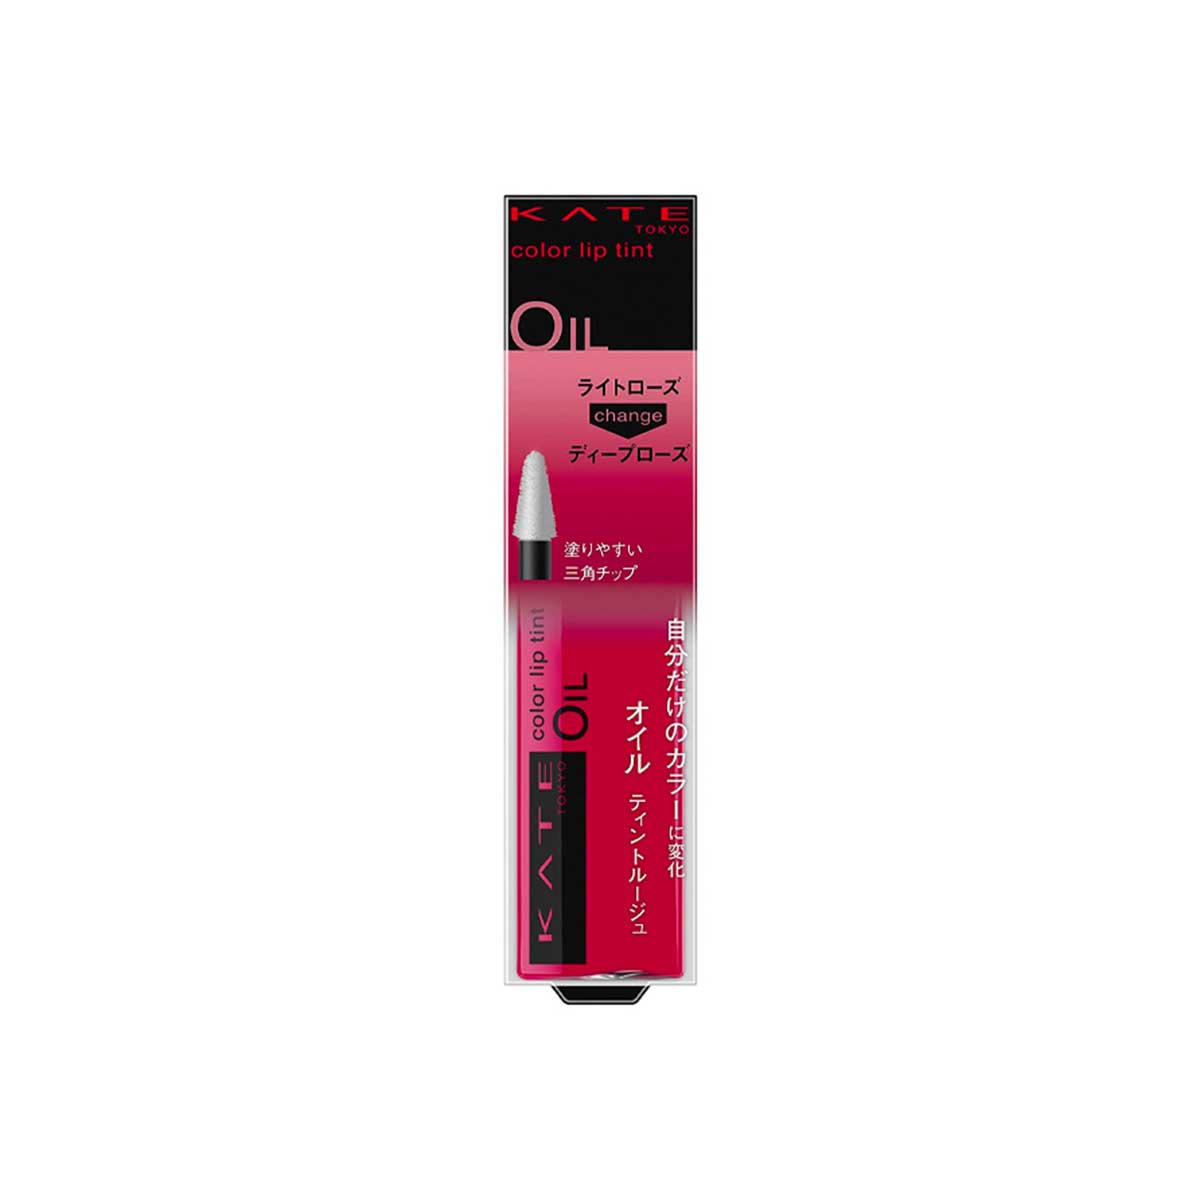 Color Lip Tint Oil Lip Gloss #RS-1  6.5g